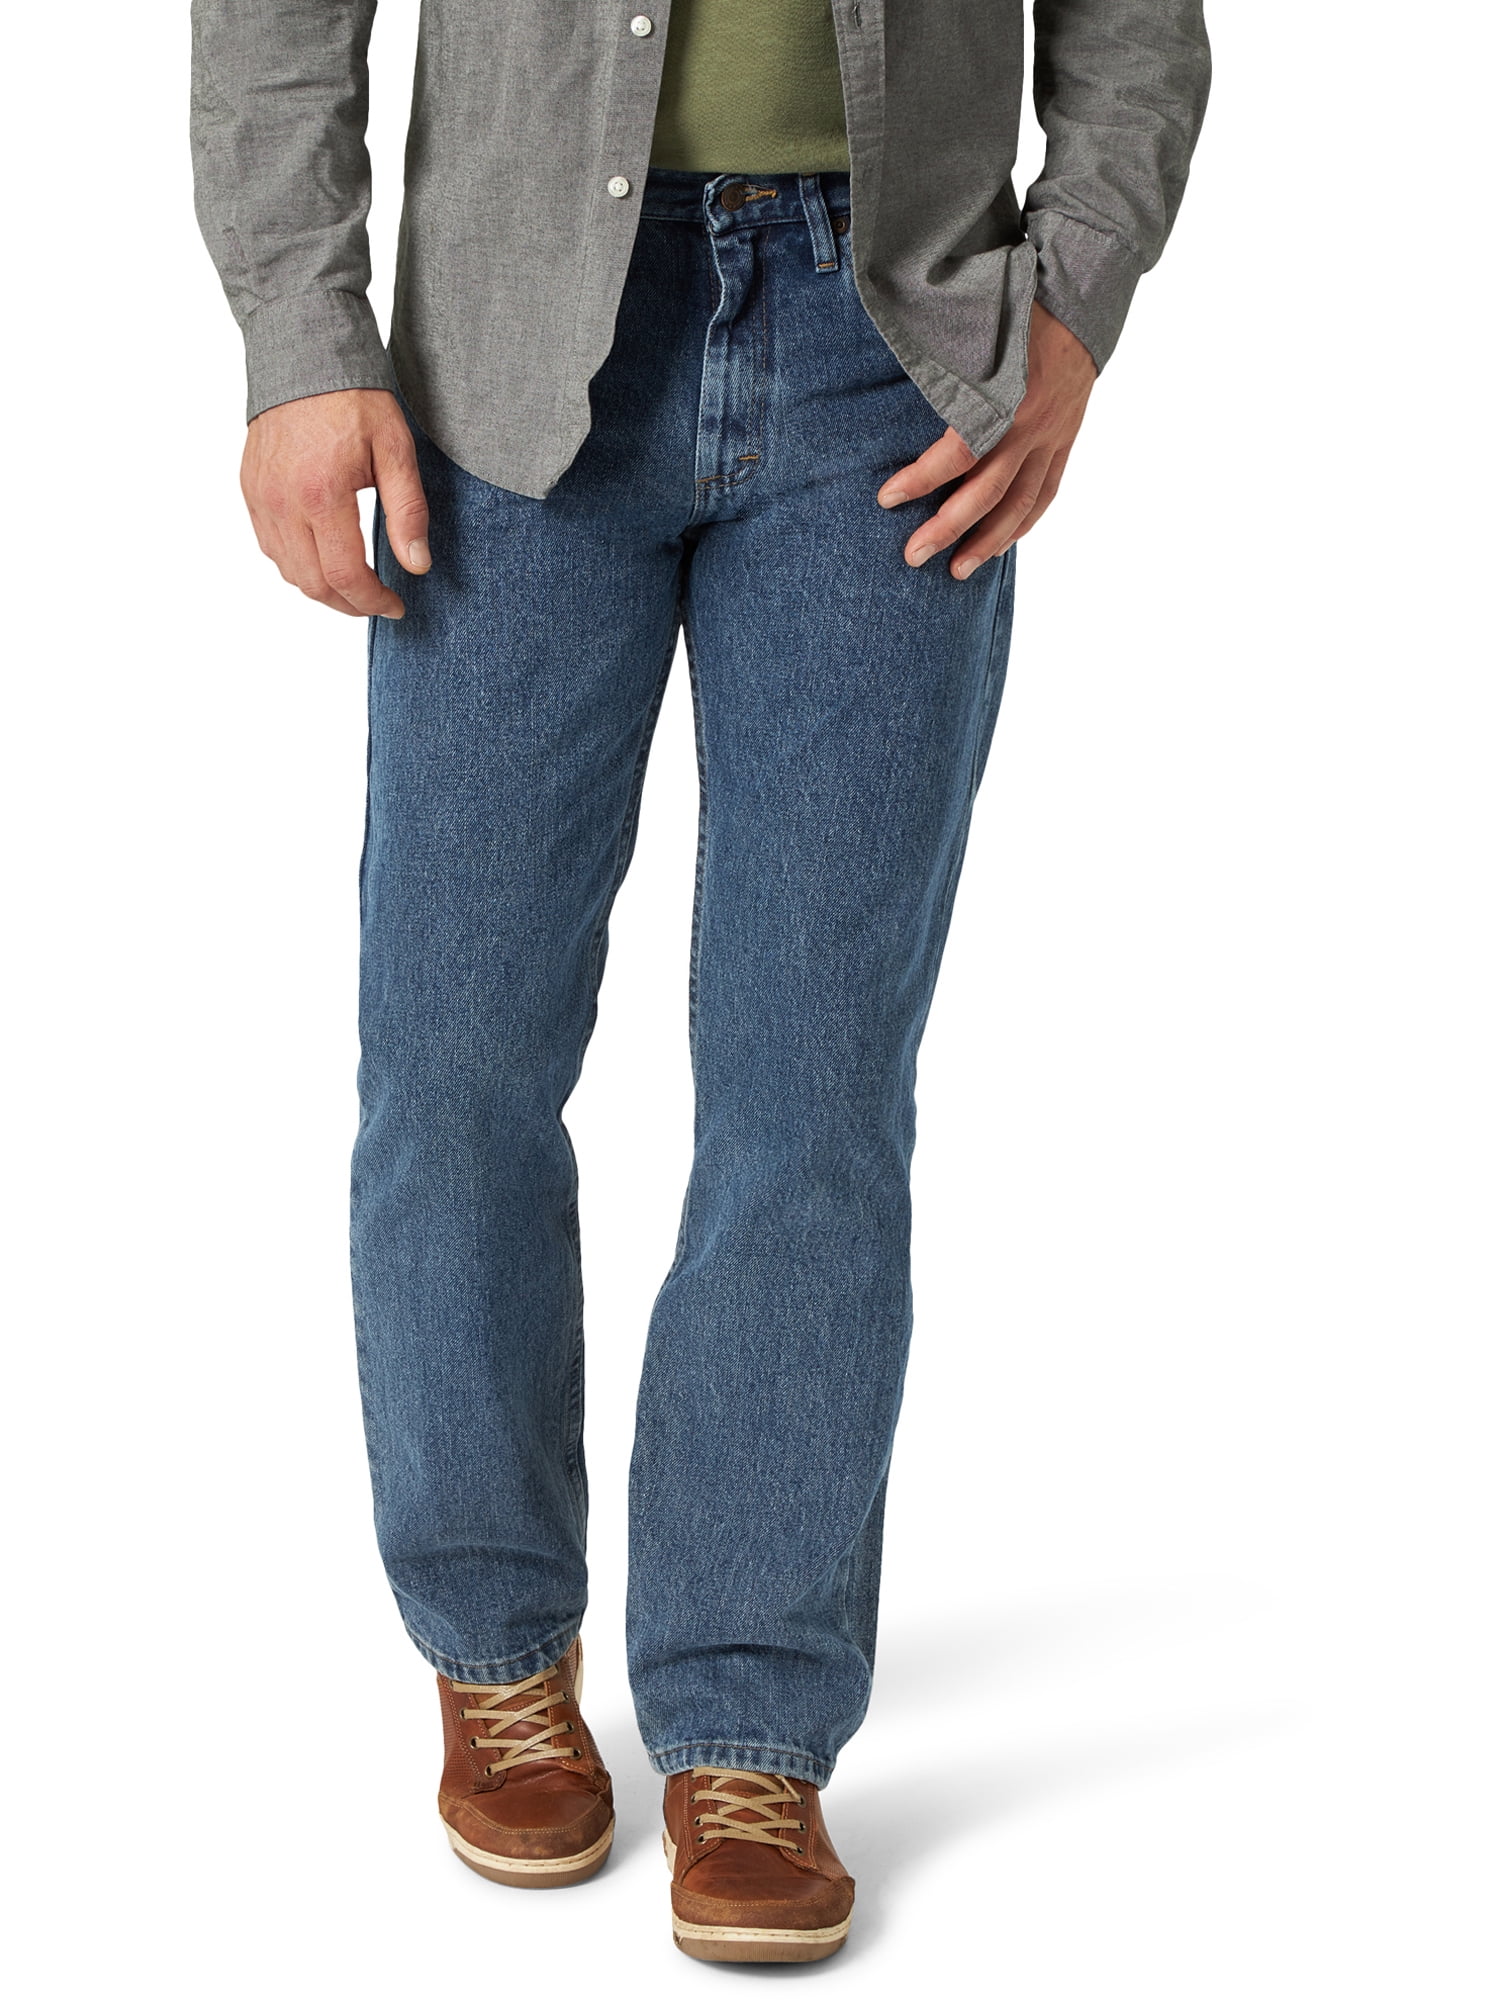 Regn Blacken Maori Wrangler Men's and Big Men's Relaxed Fit Jeans - Walmart.com